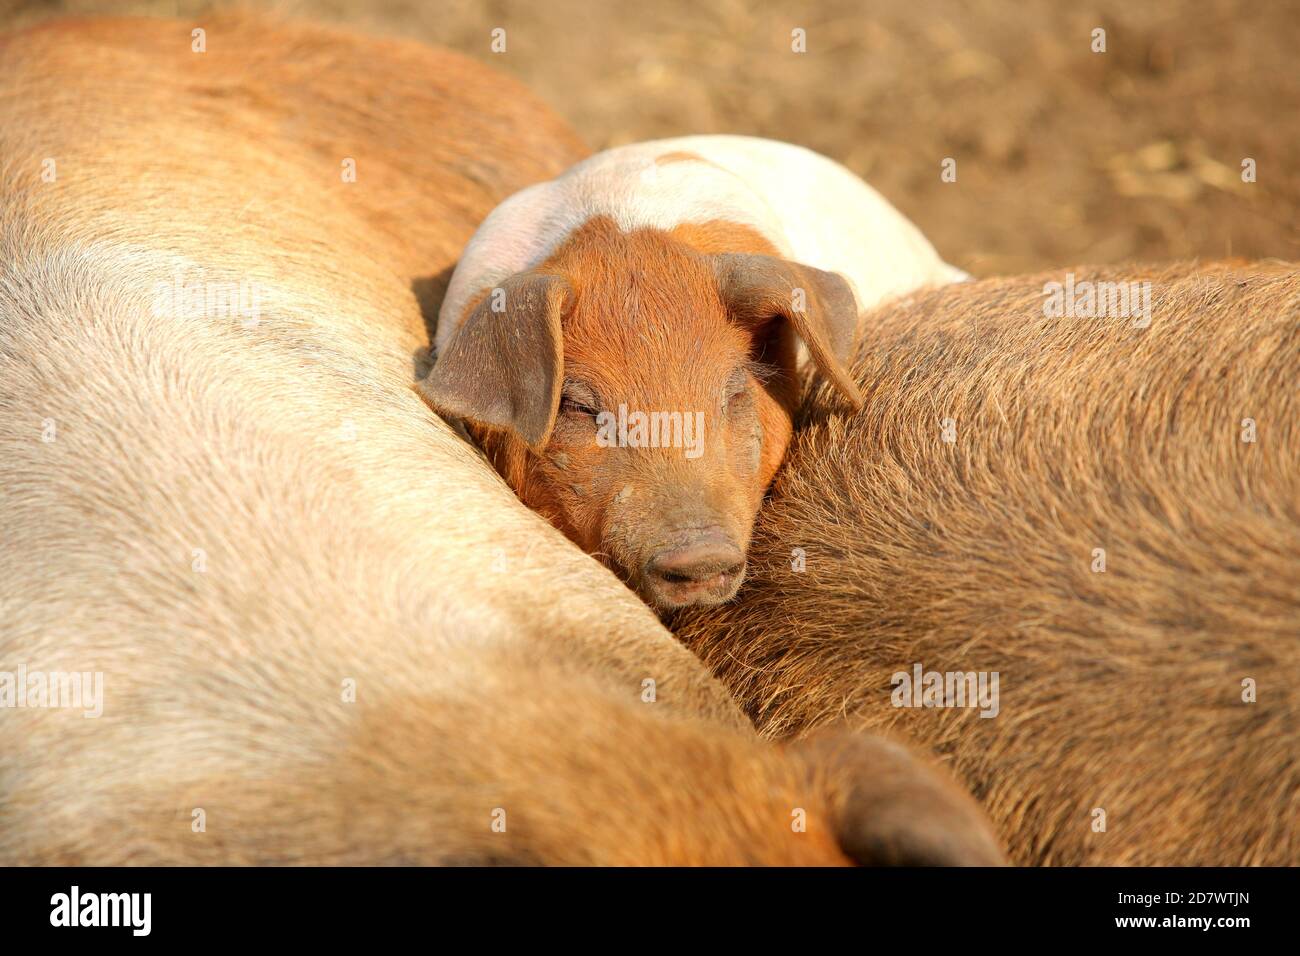 Rotbuntes Husumer Schwein, FERKEL. Maiale Husum di colore rosso, maialino. Foto Stock